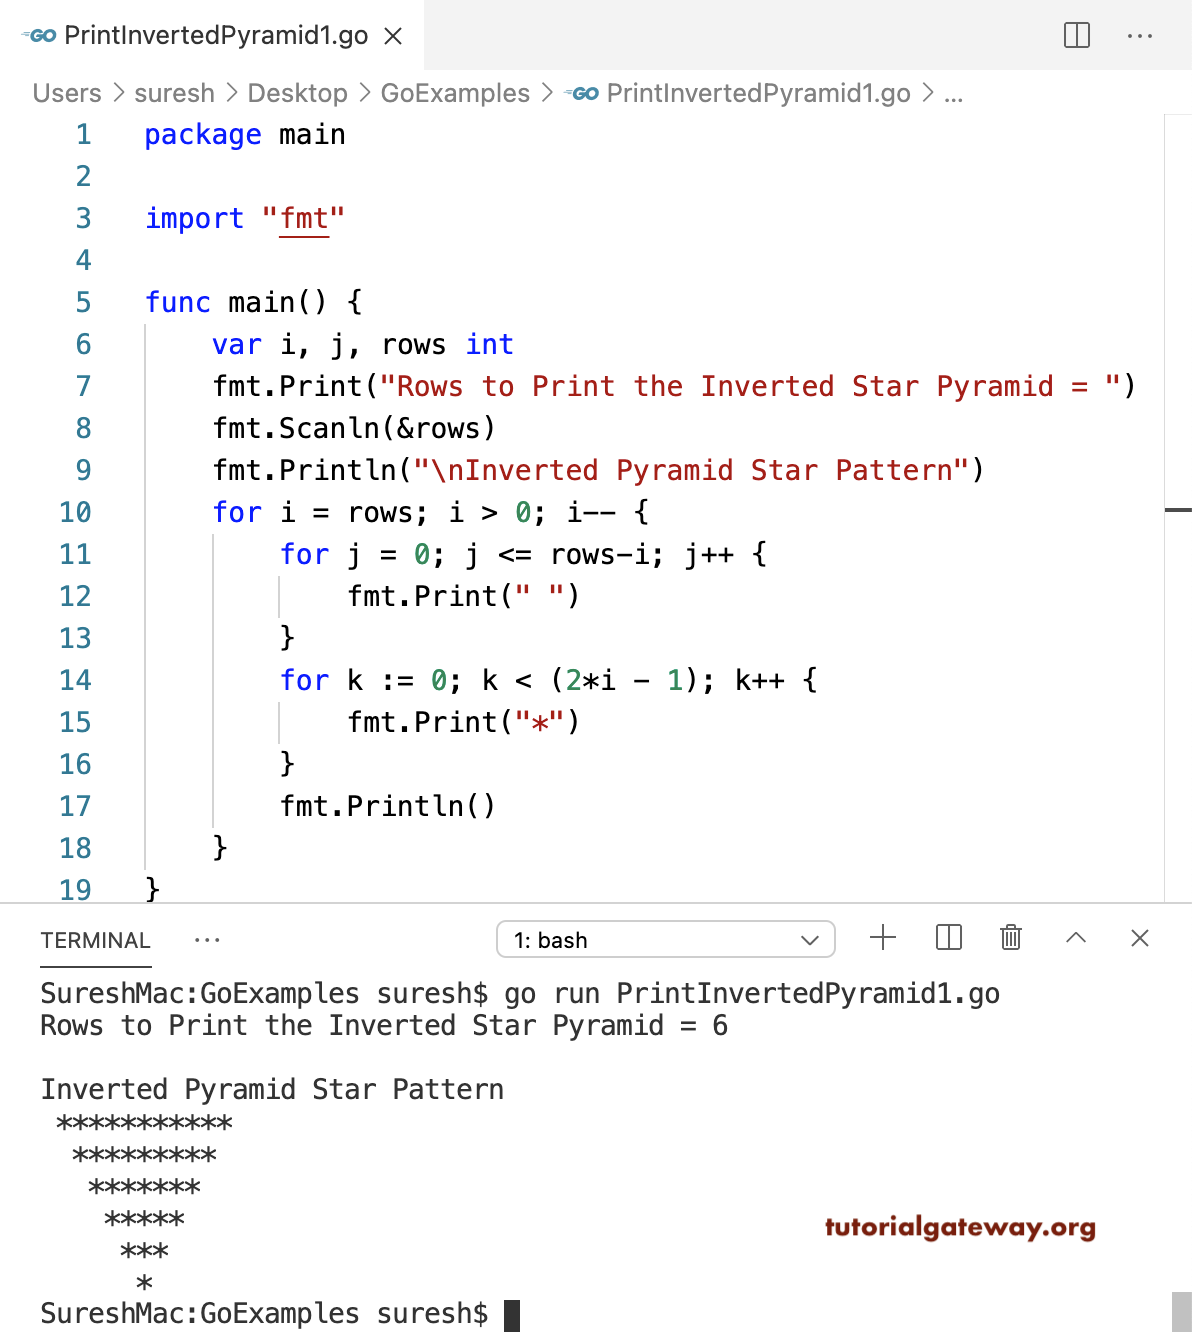 Go Program to Print Inverted Pyramid Star Pattern 1